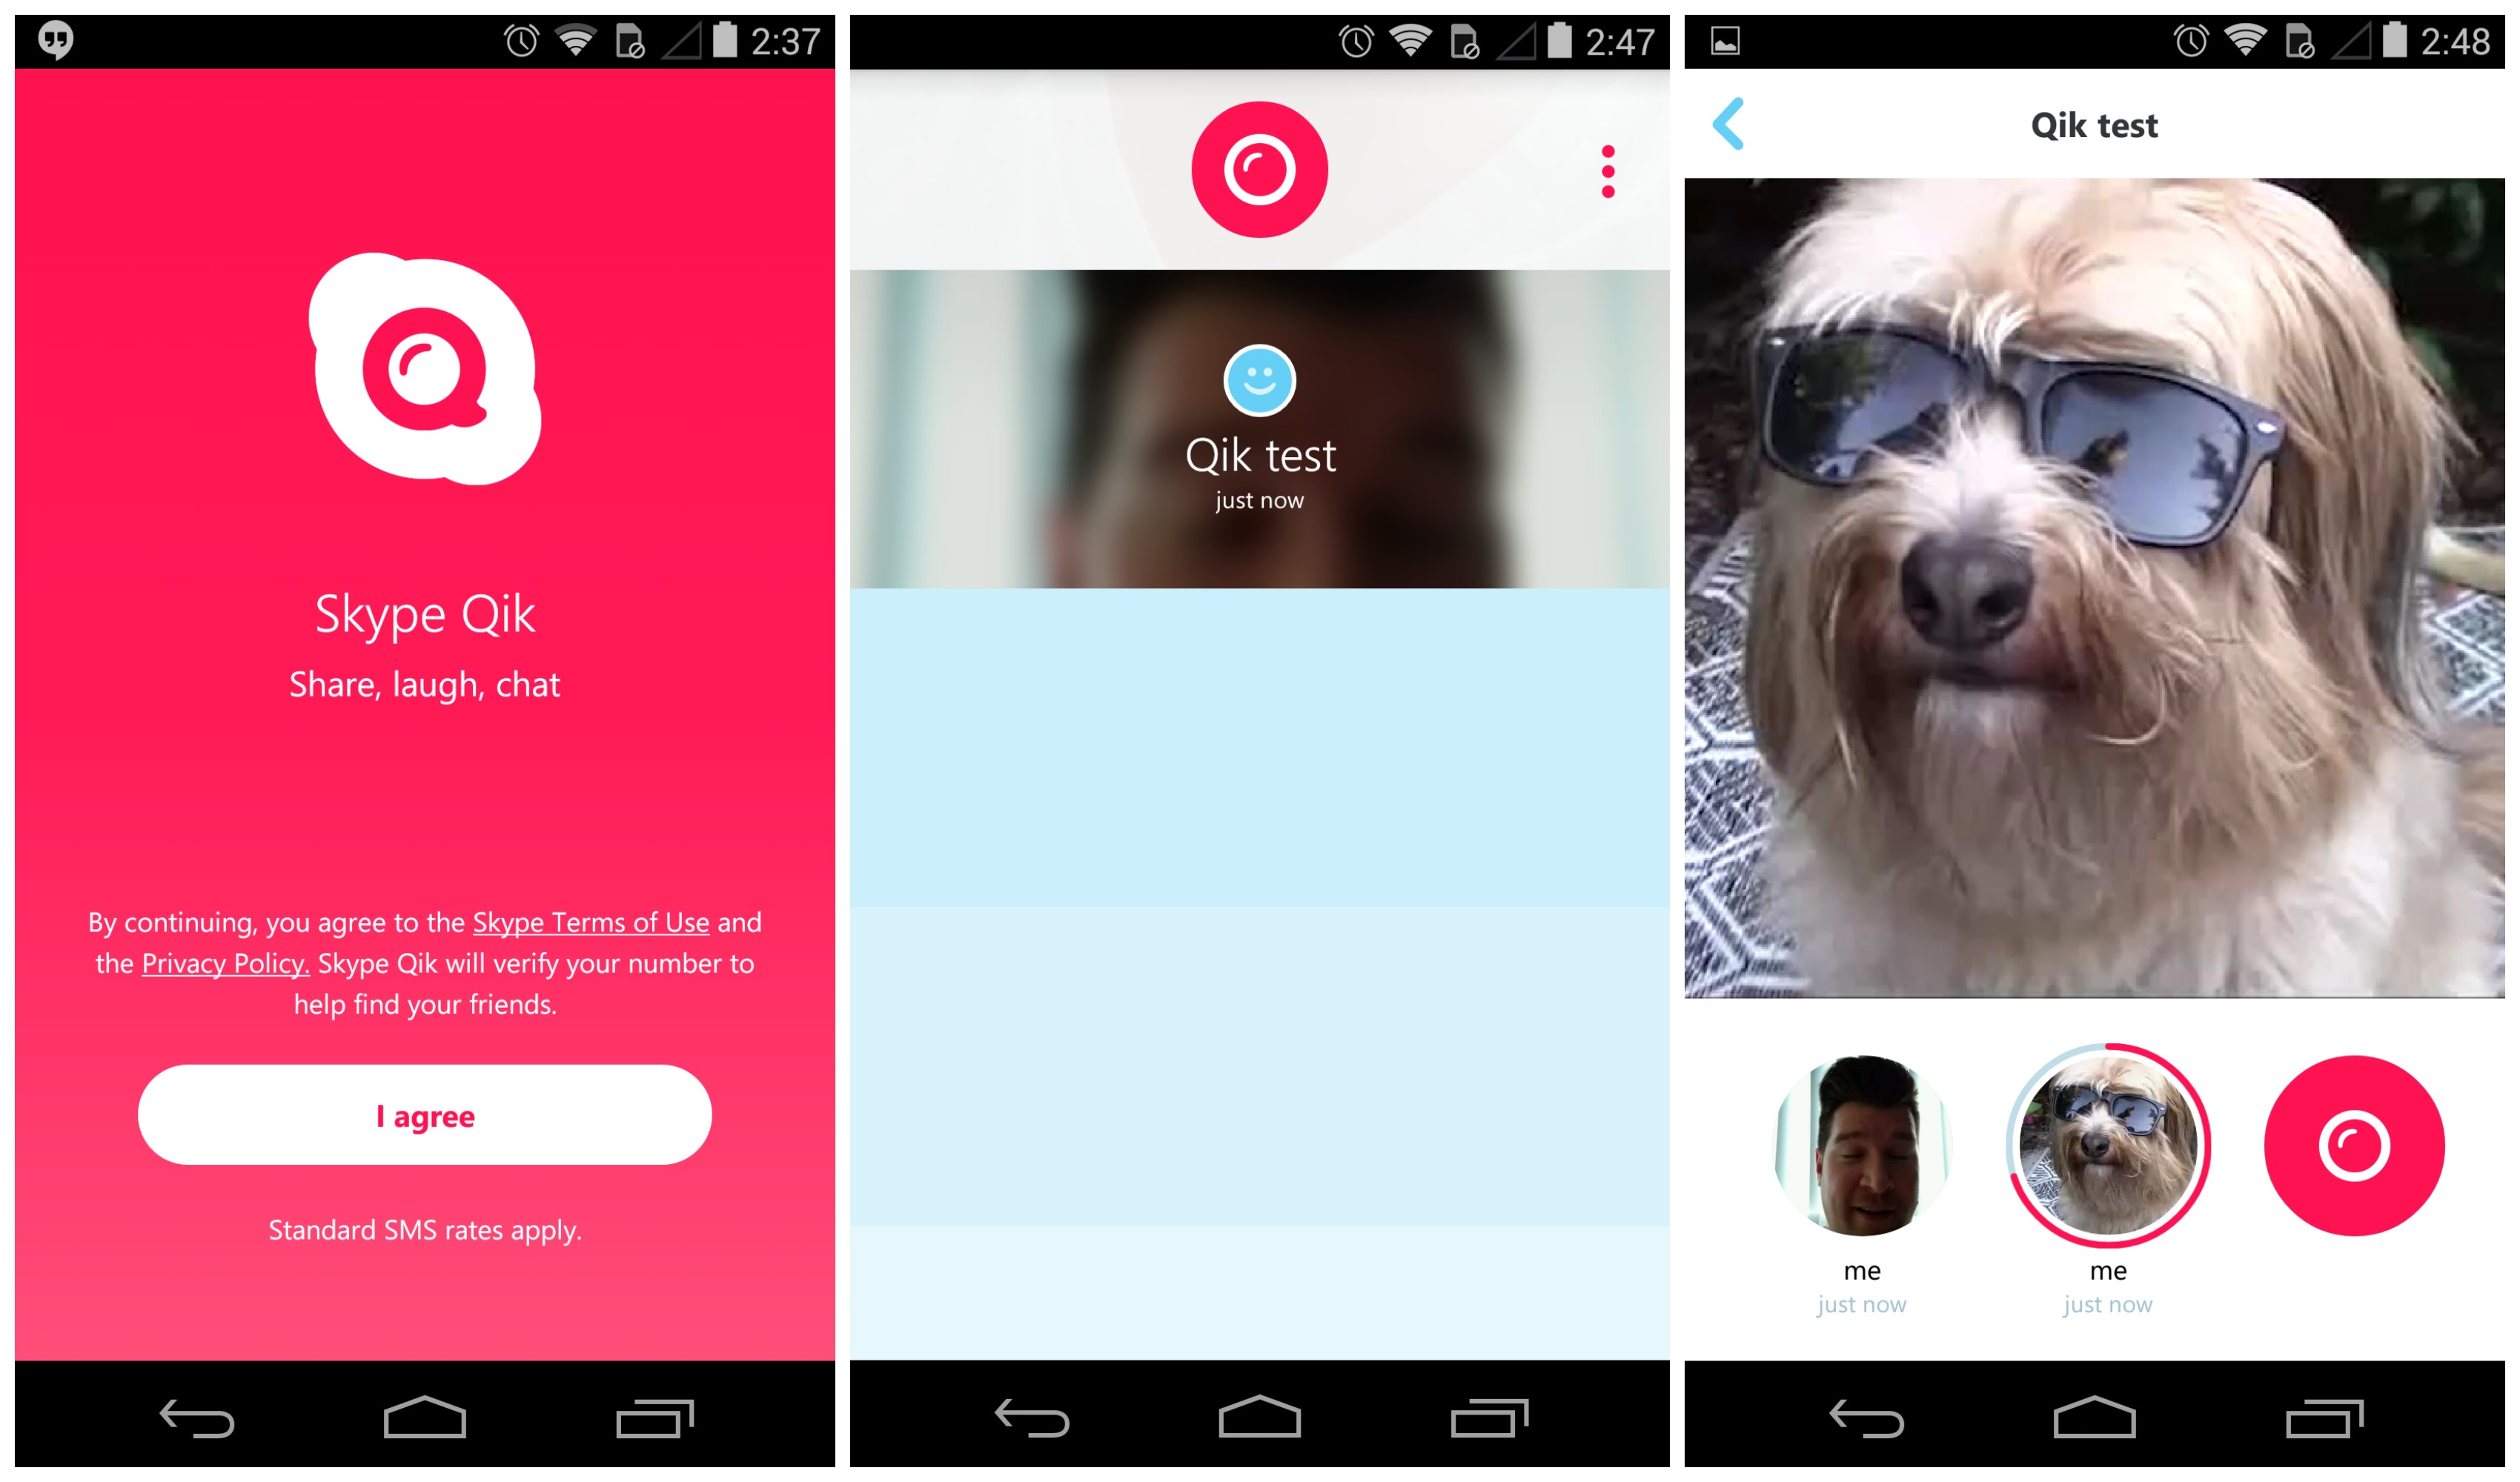 Skype Qik Interface Screens (2014)